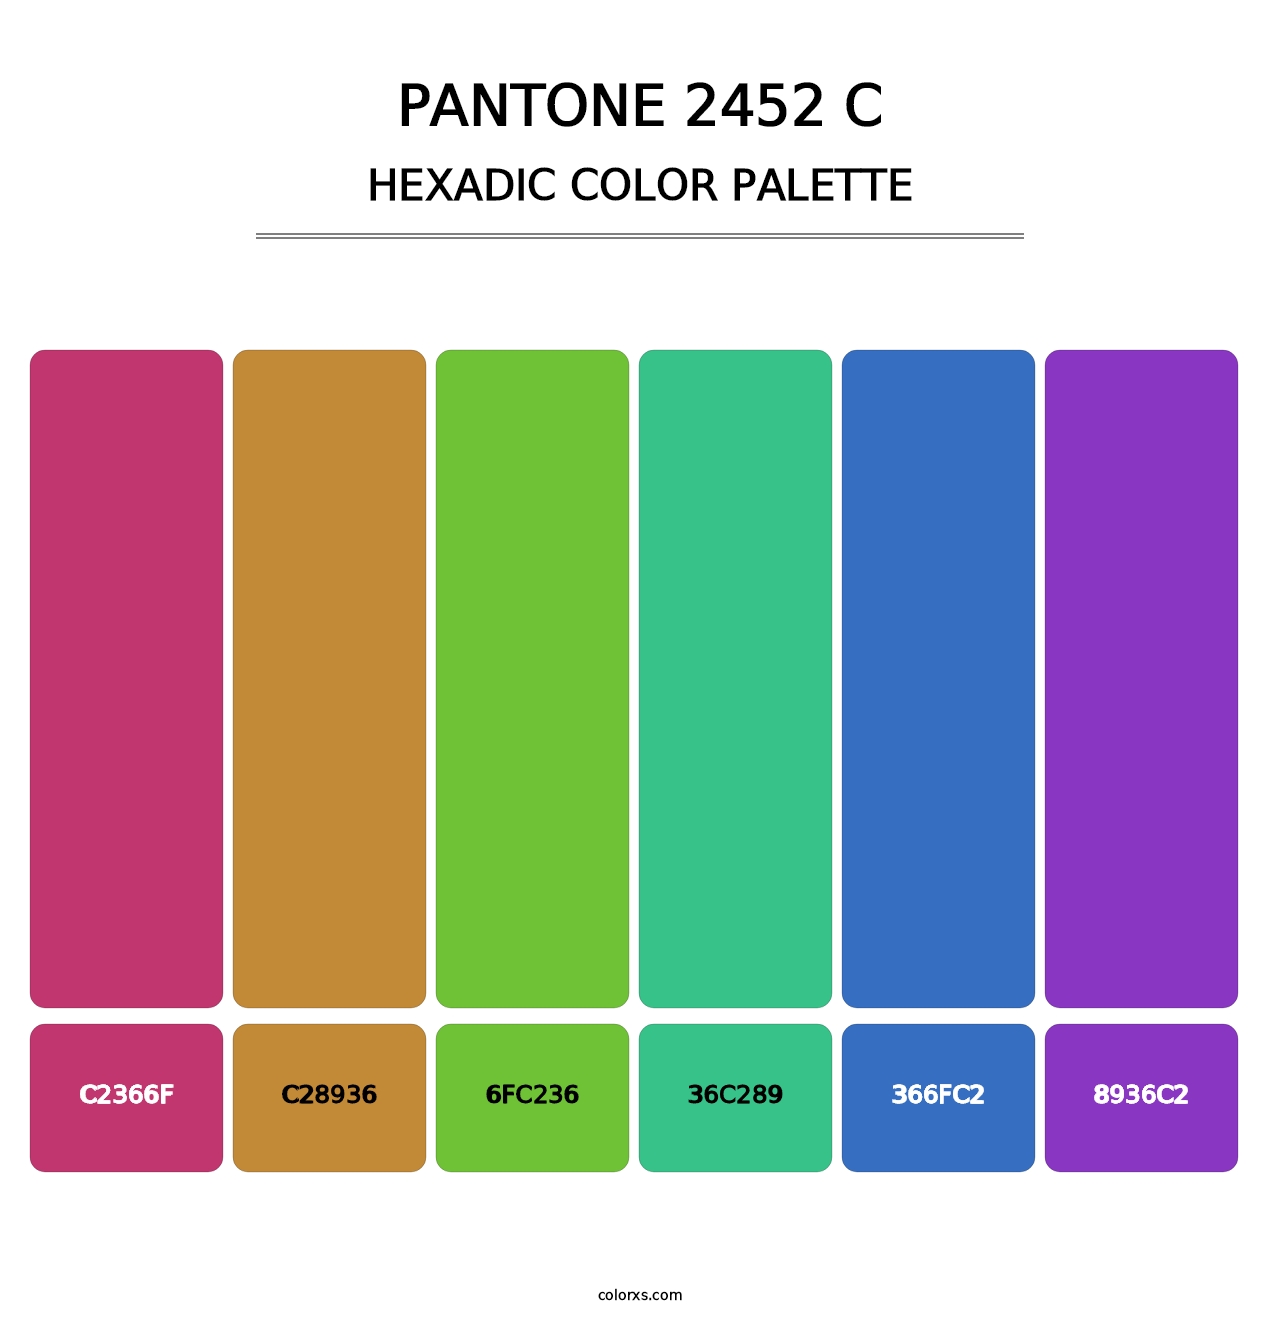 PANTONE 2452 C - Hexadic Color Palette